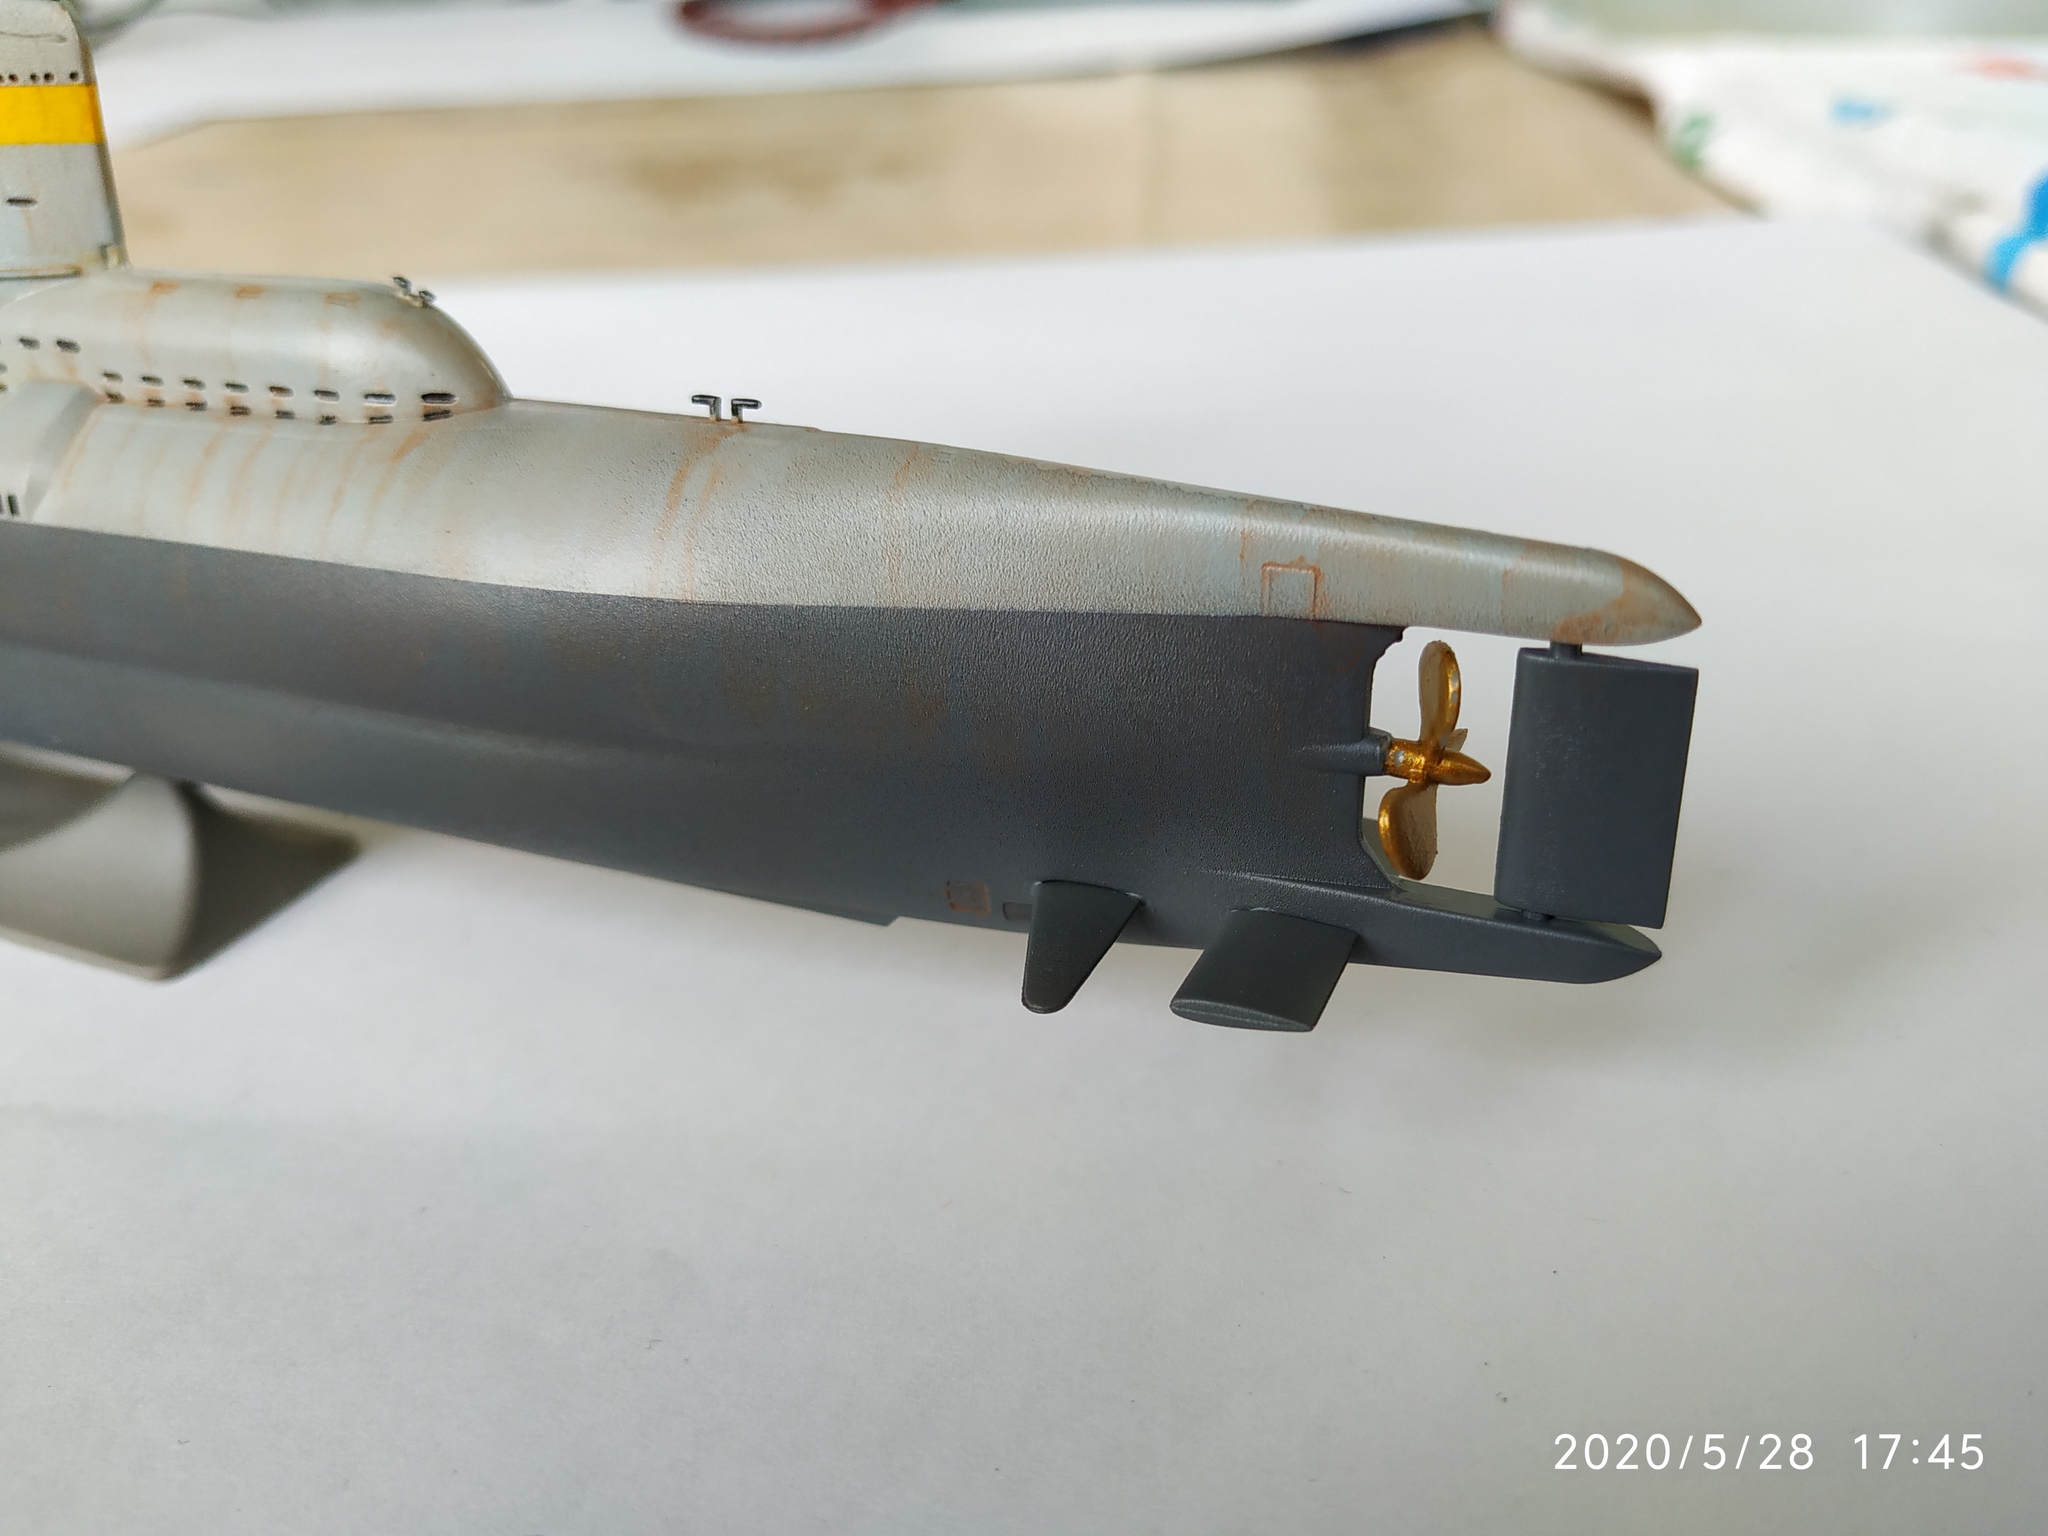 Model submarine TYPE XXIII 1:144 from Revell - Ship modeling, Stand modeling, Scale model, Modeling, Revell, Longpost, Submarine